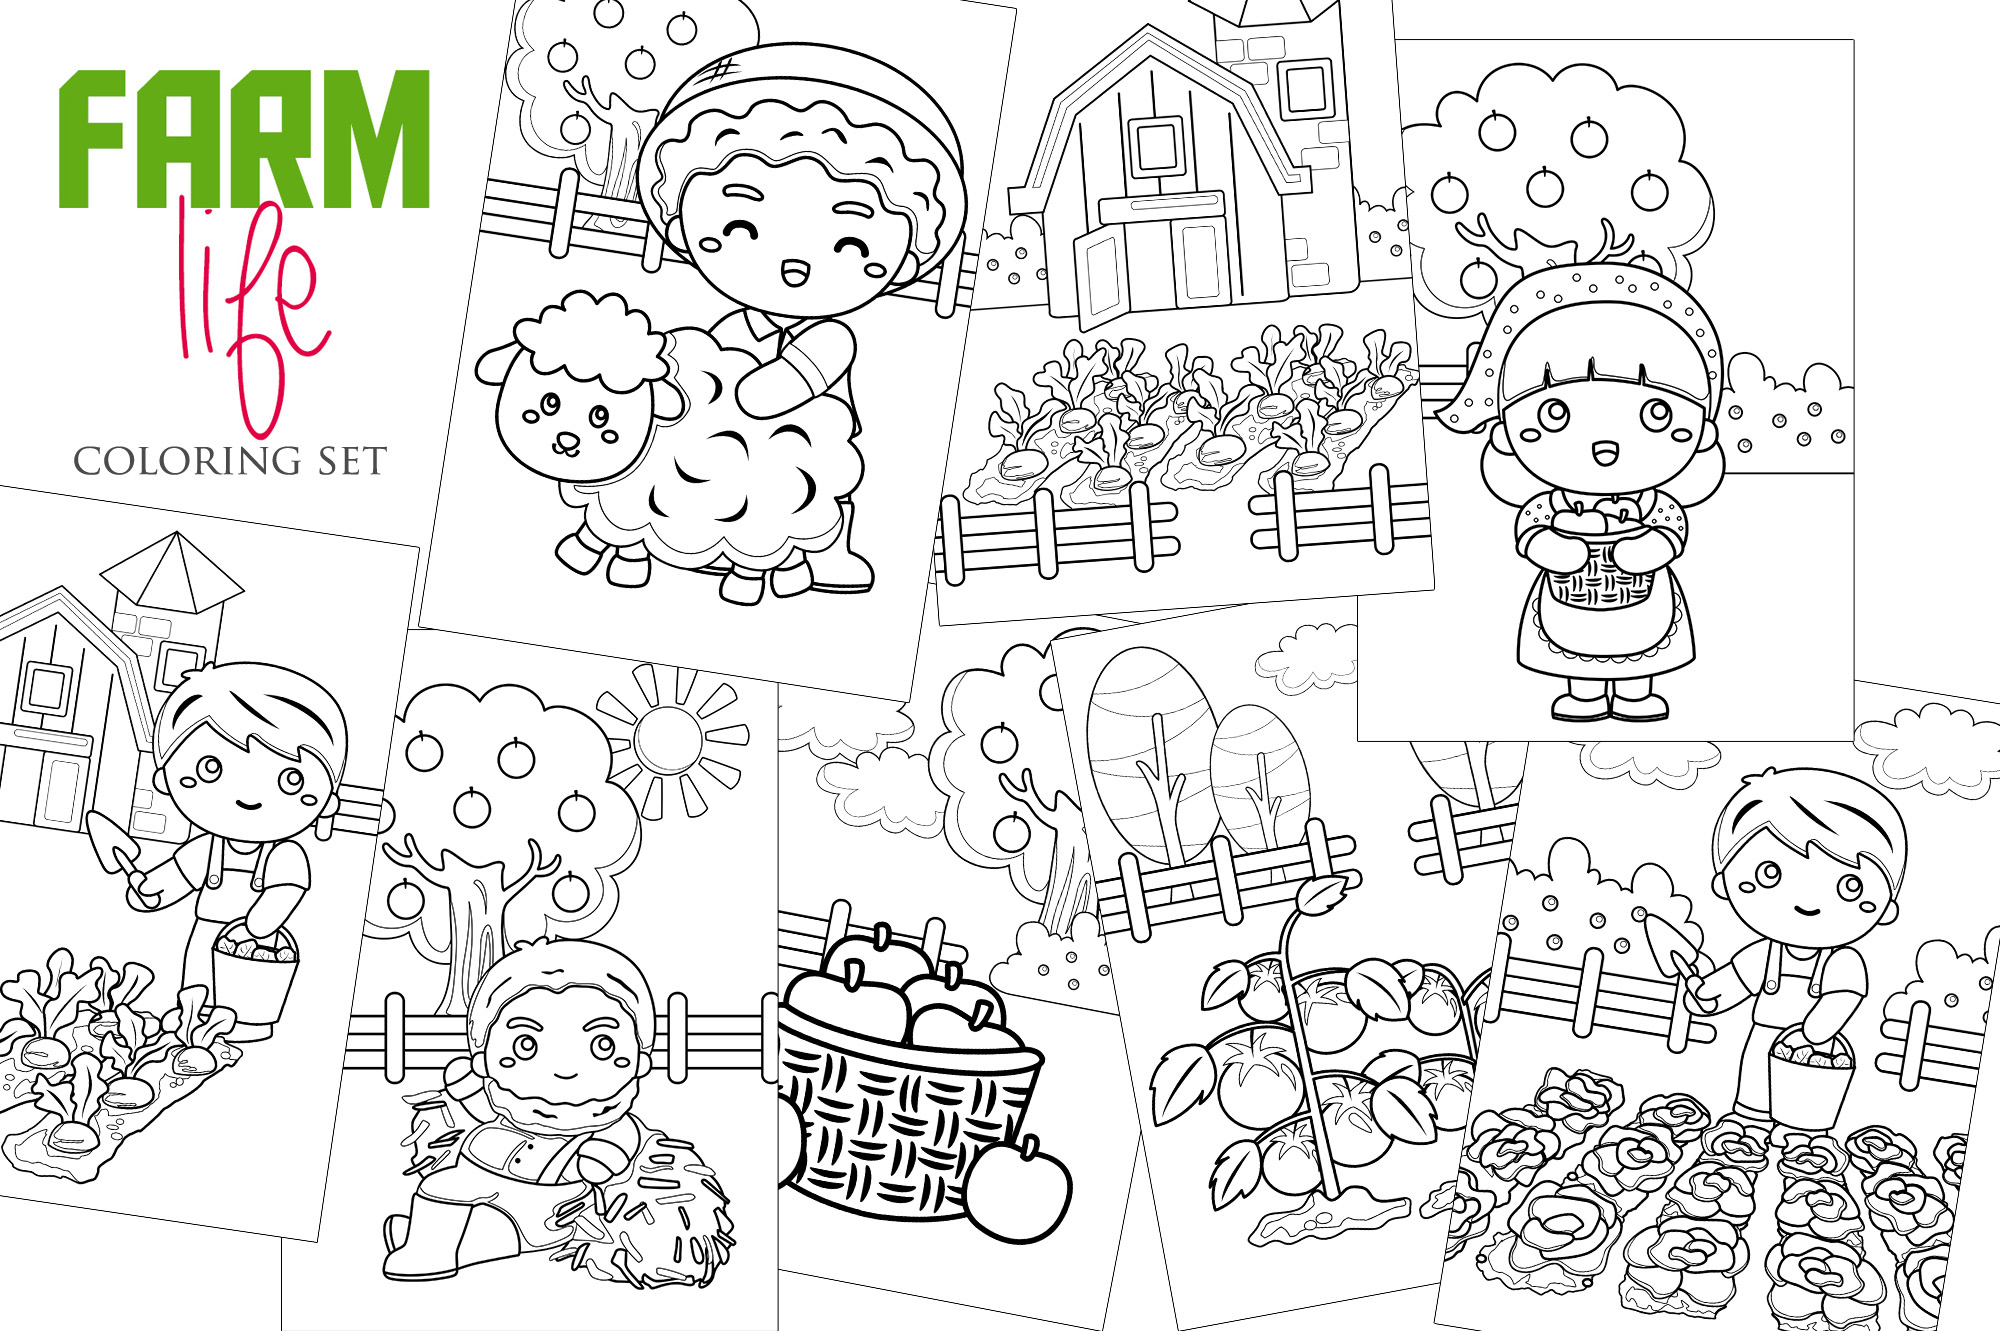 Farm life coloring set with farm animals.